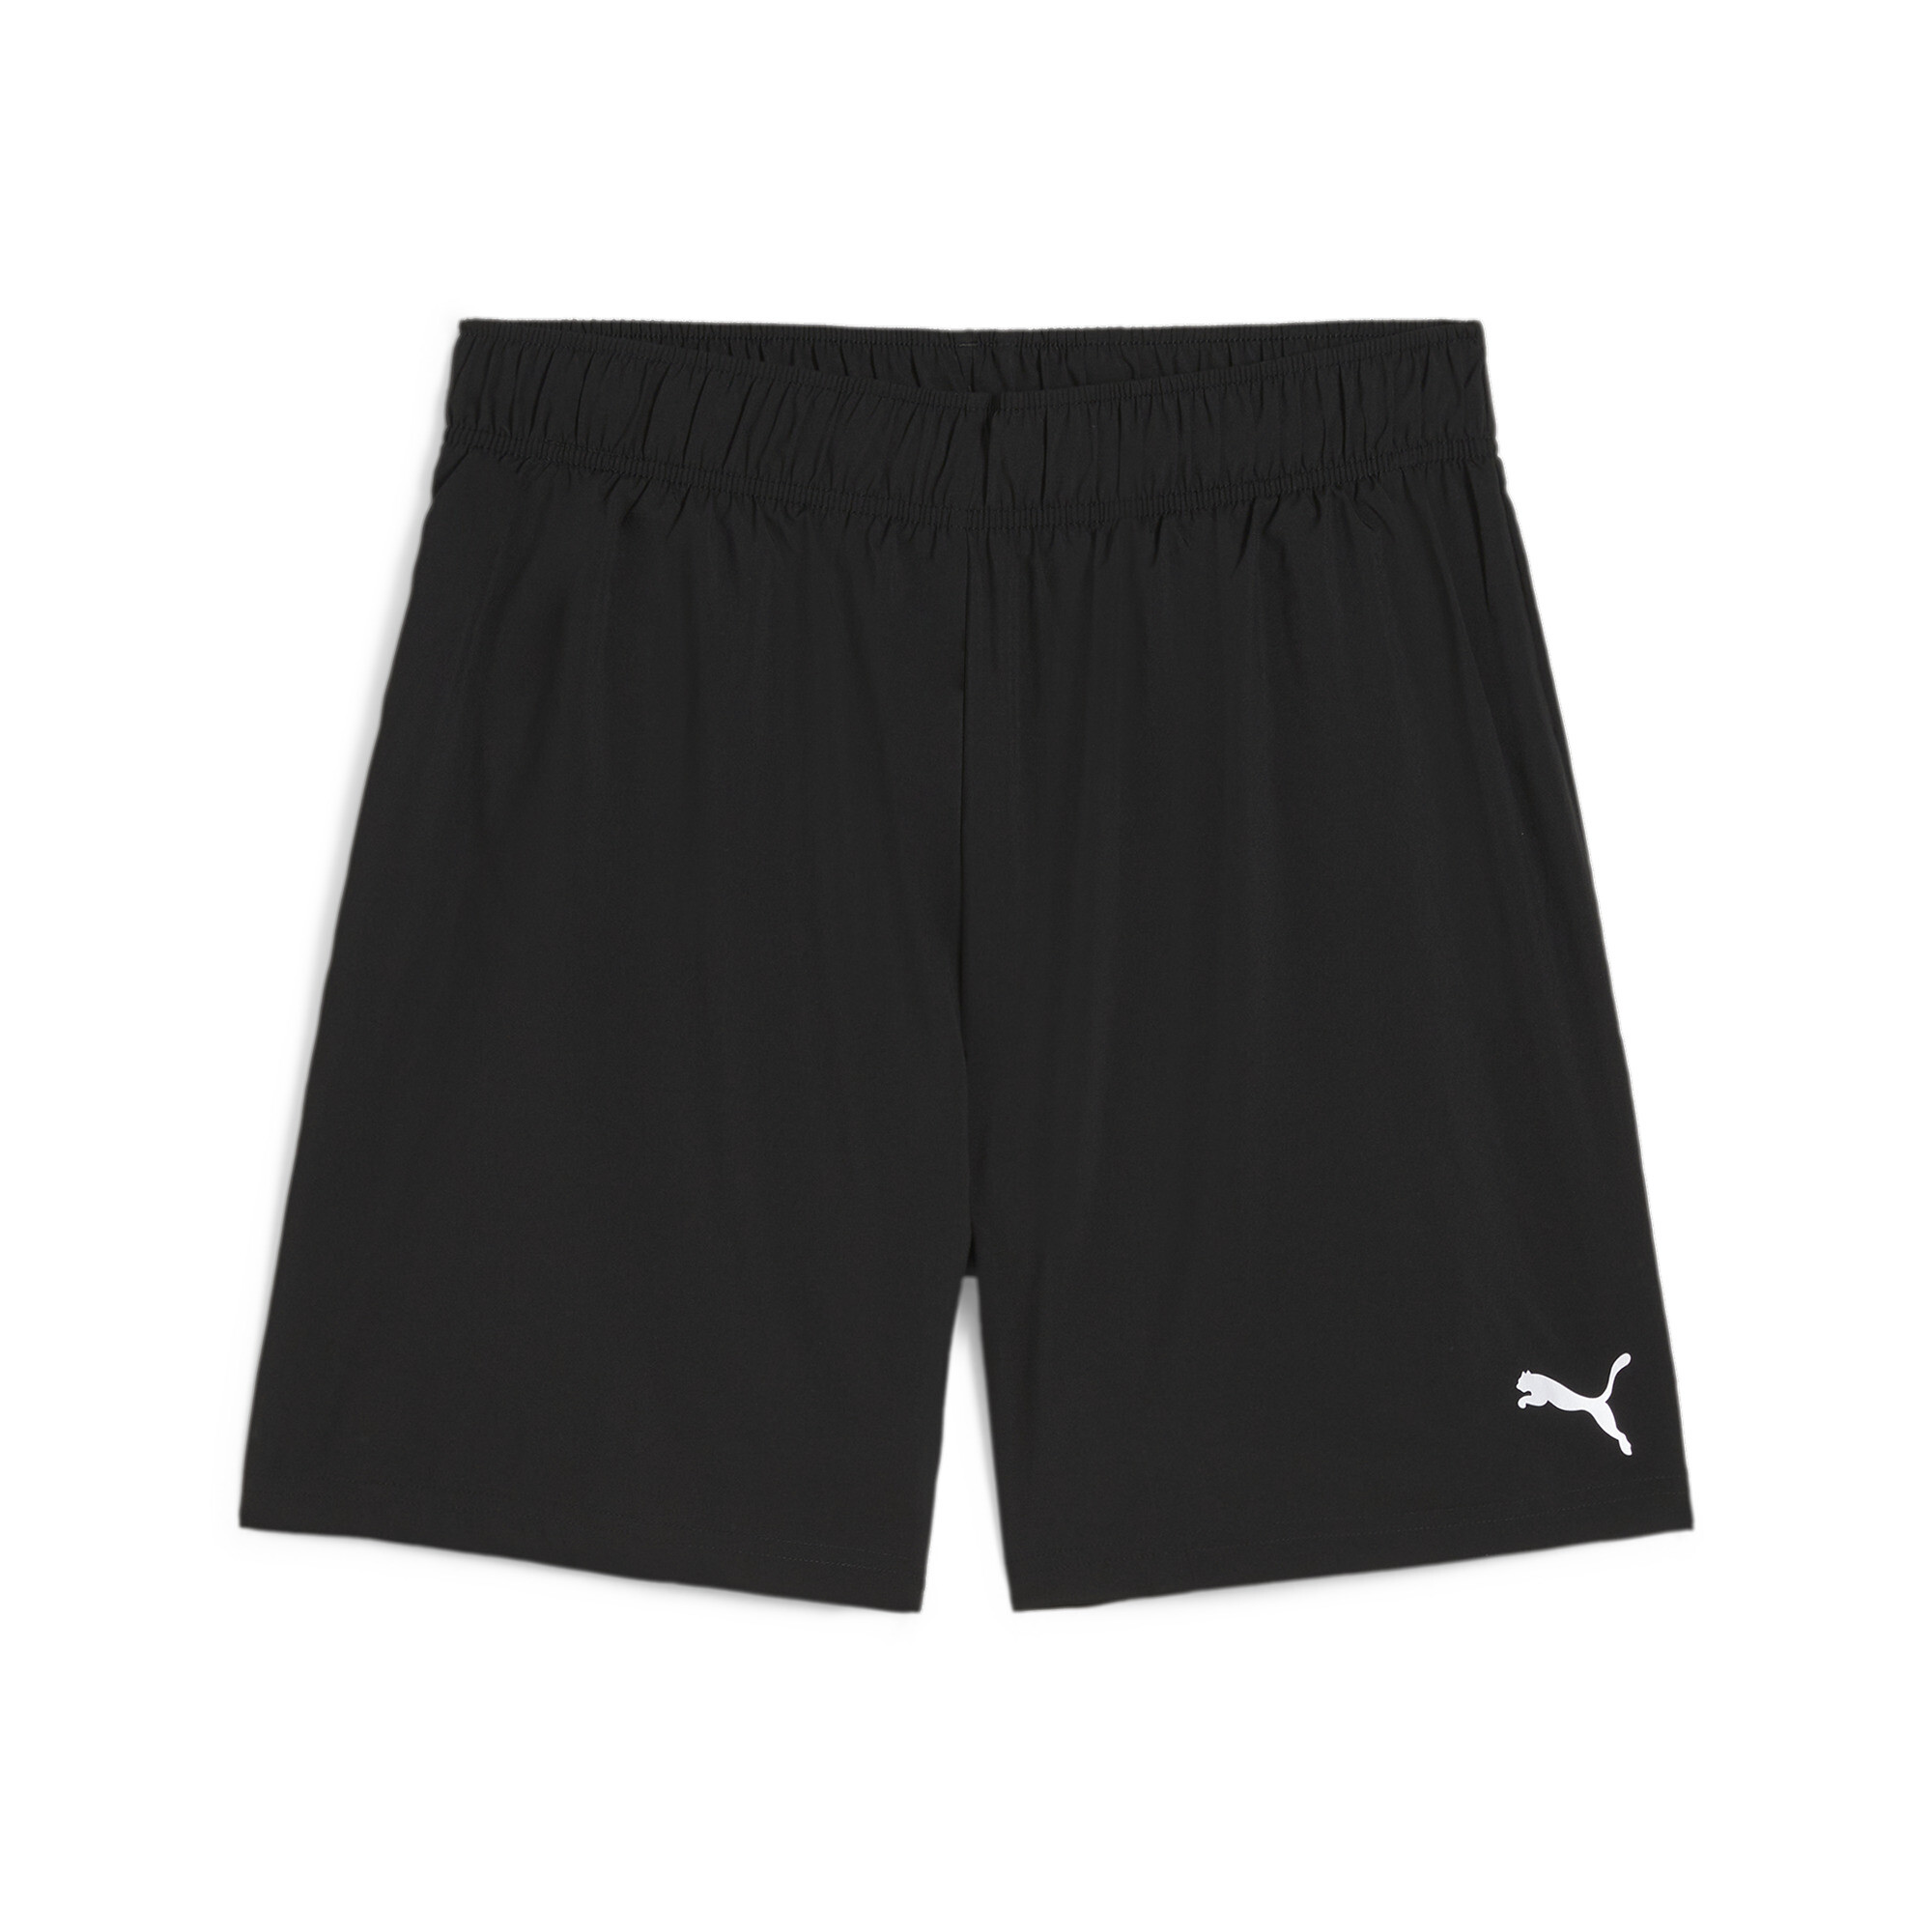 PUMA Favourite 2-in-1 Running Shorts Mens | eBay